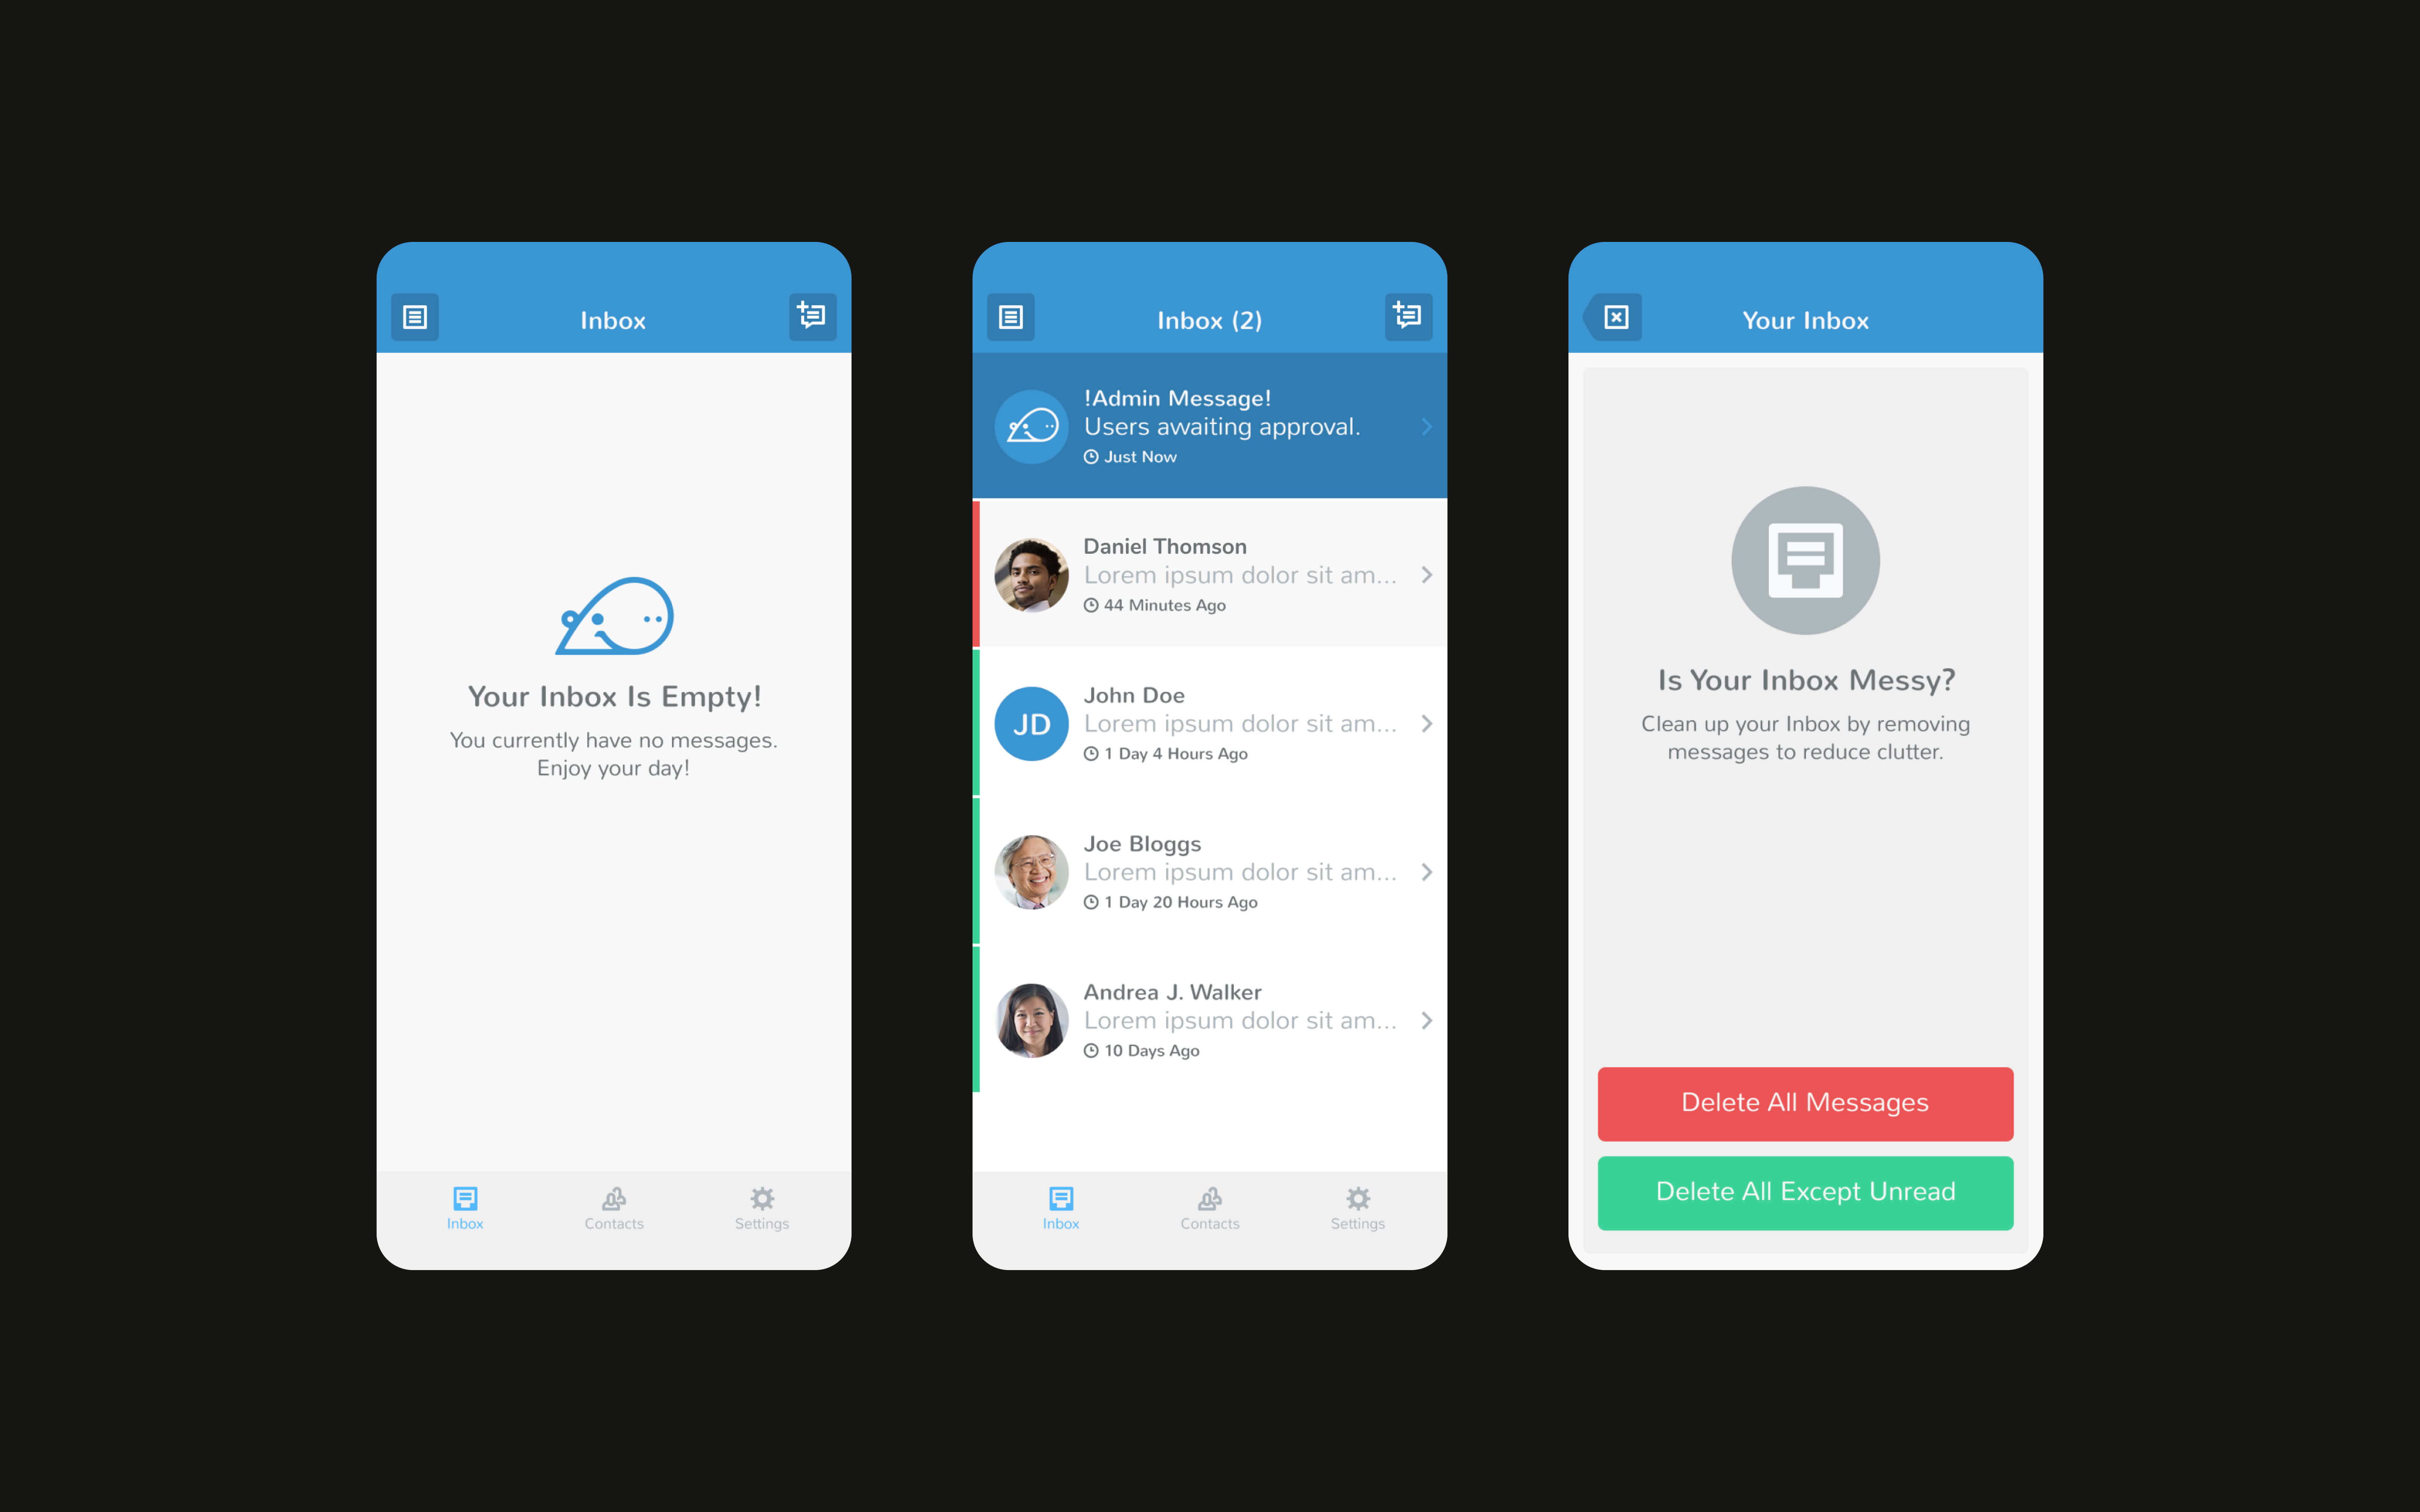 Hippomsg Mobile Application UI Designs